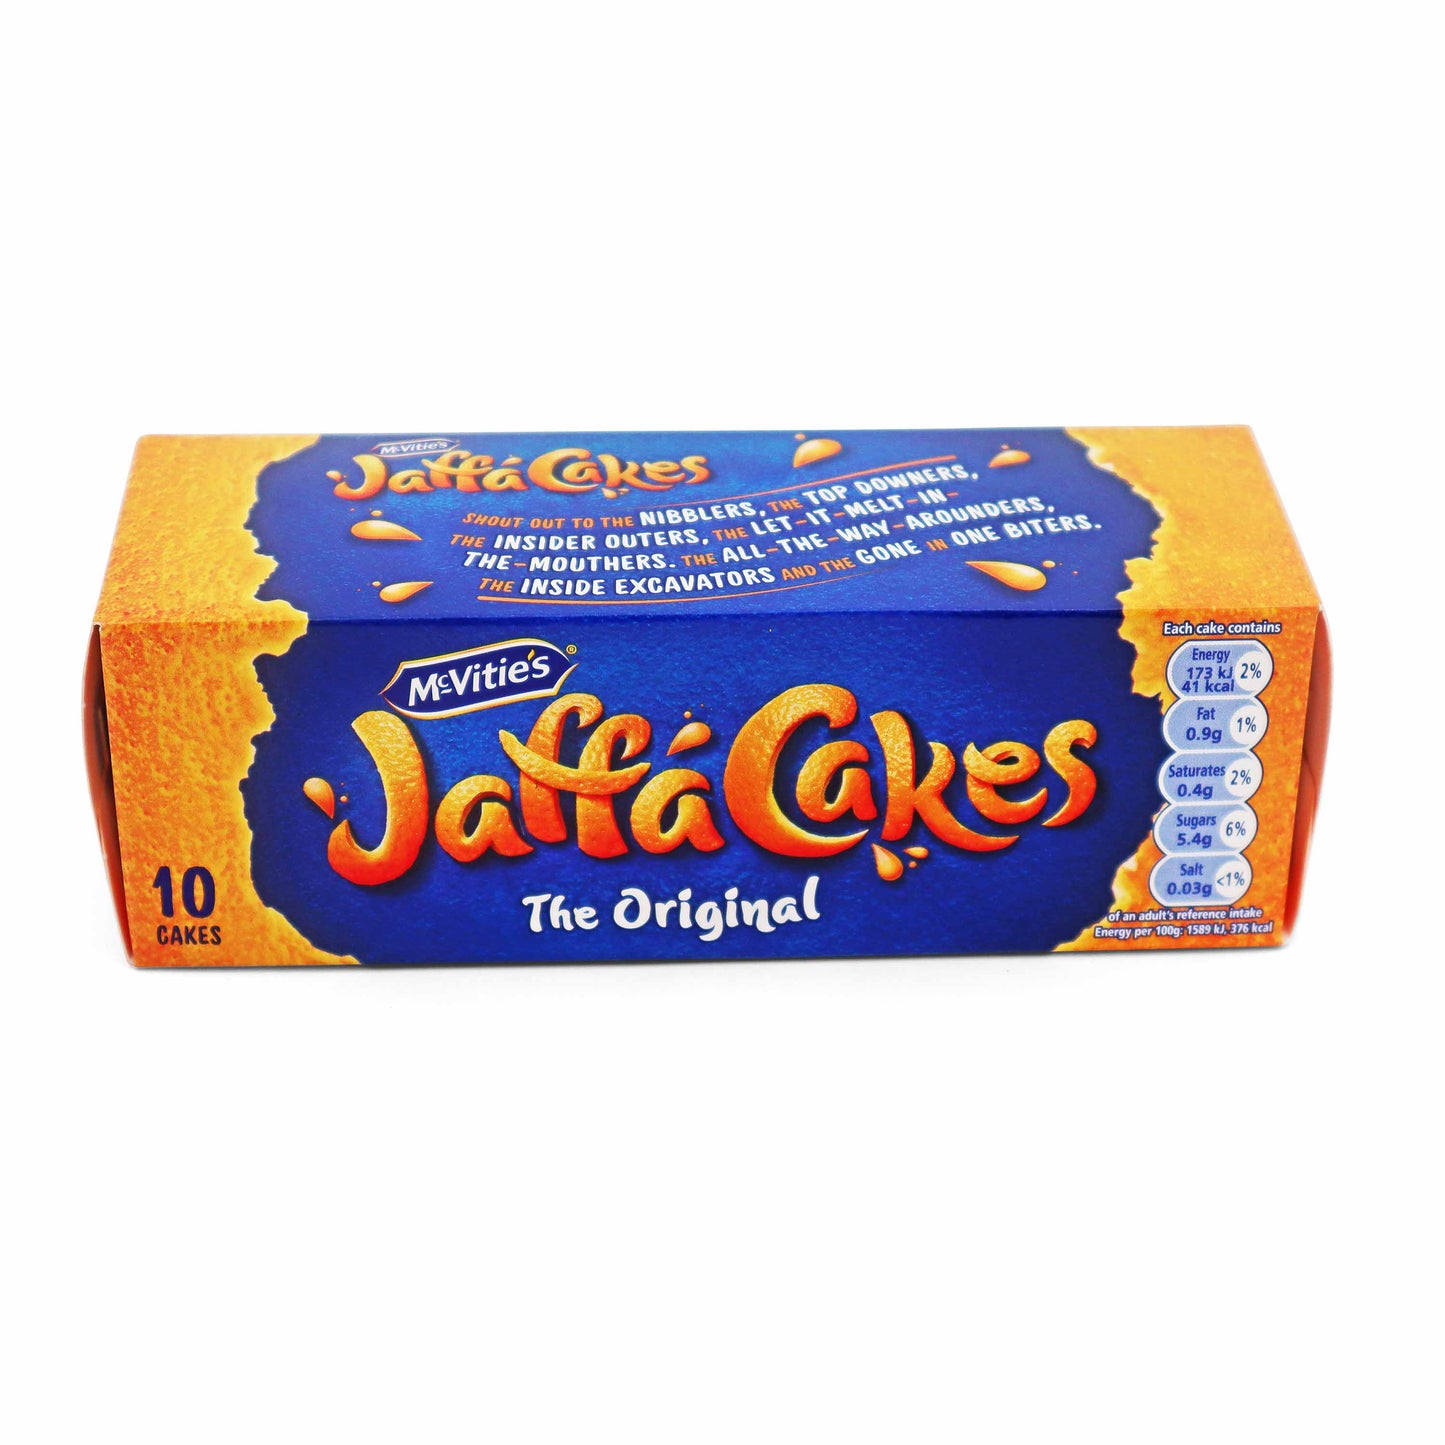 McVitie's Jaffa Cakes Original Biscuits 10 Cakes - 110g - British Snacks